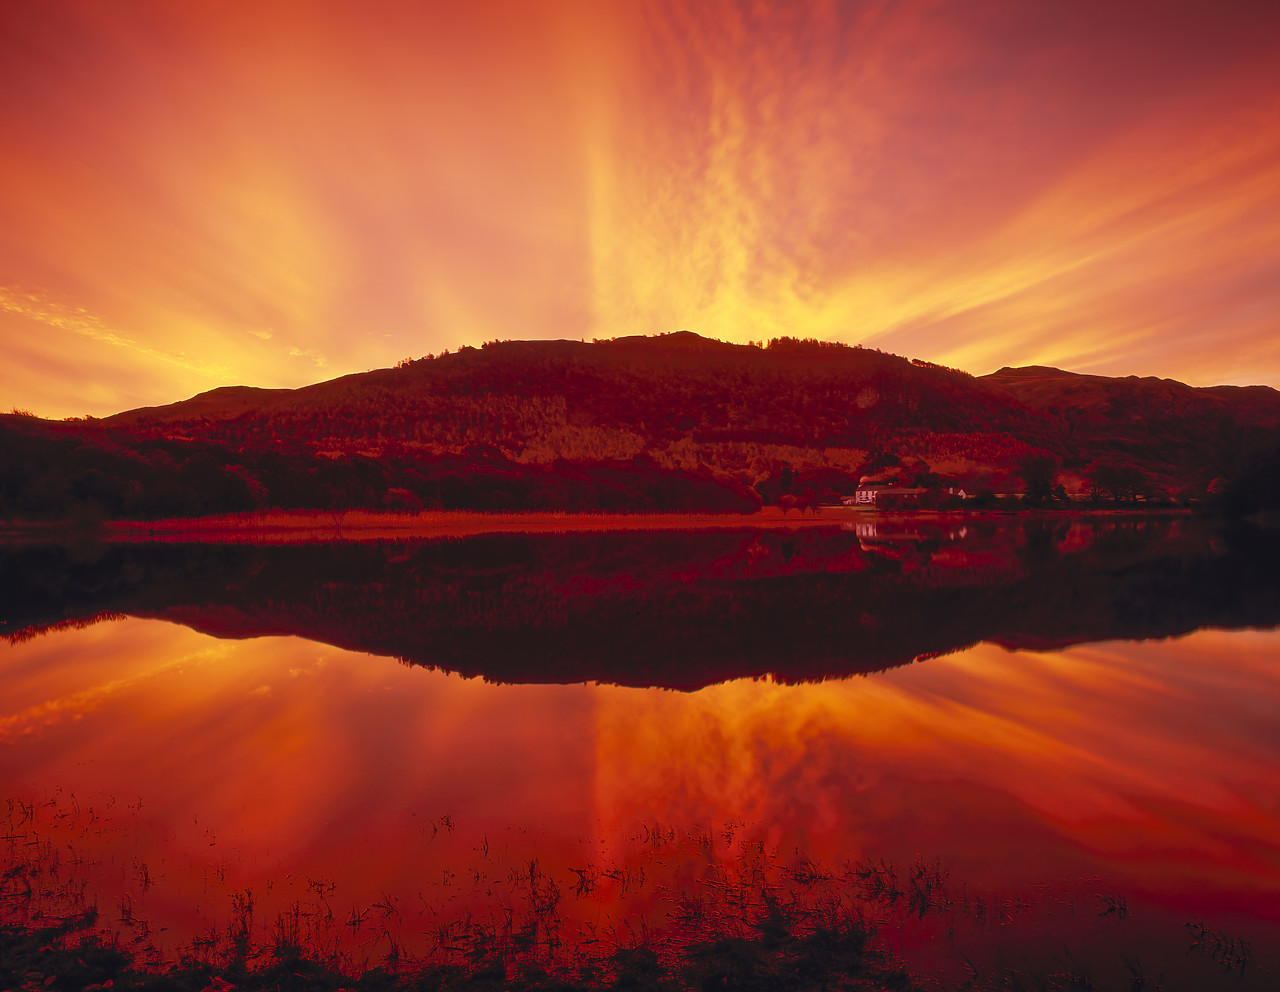 #980992-3 - Derwent Water at Sunrise, Lake District National Park, Cumbria, England